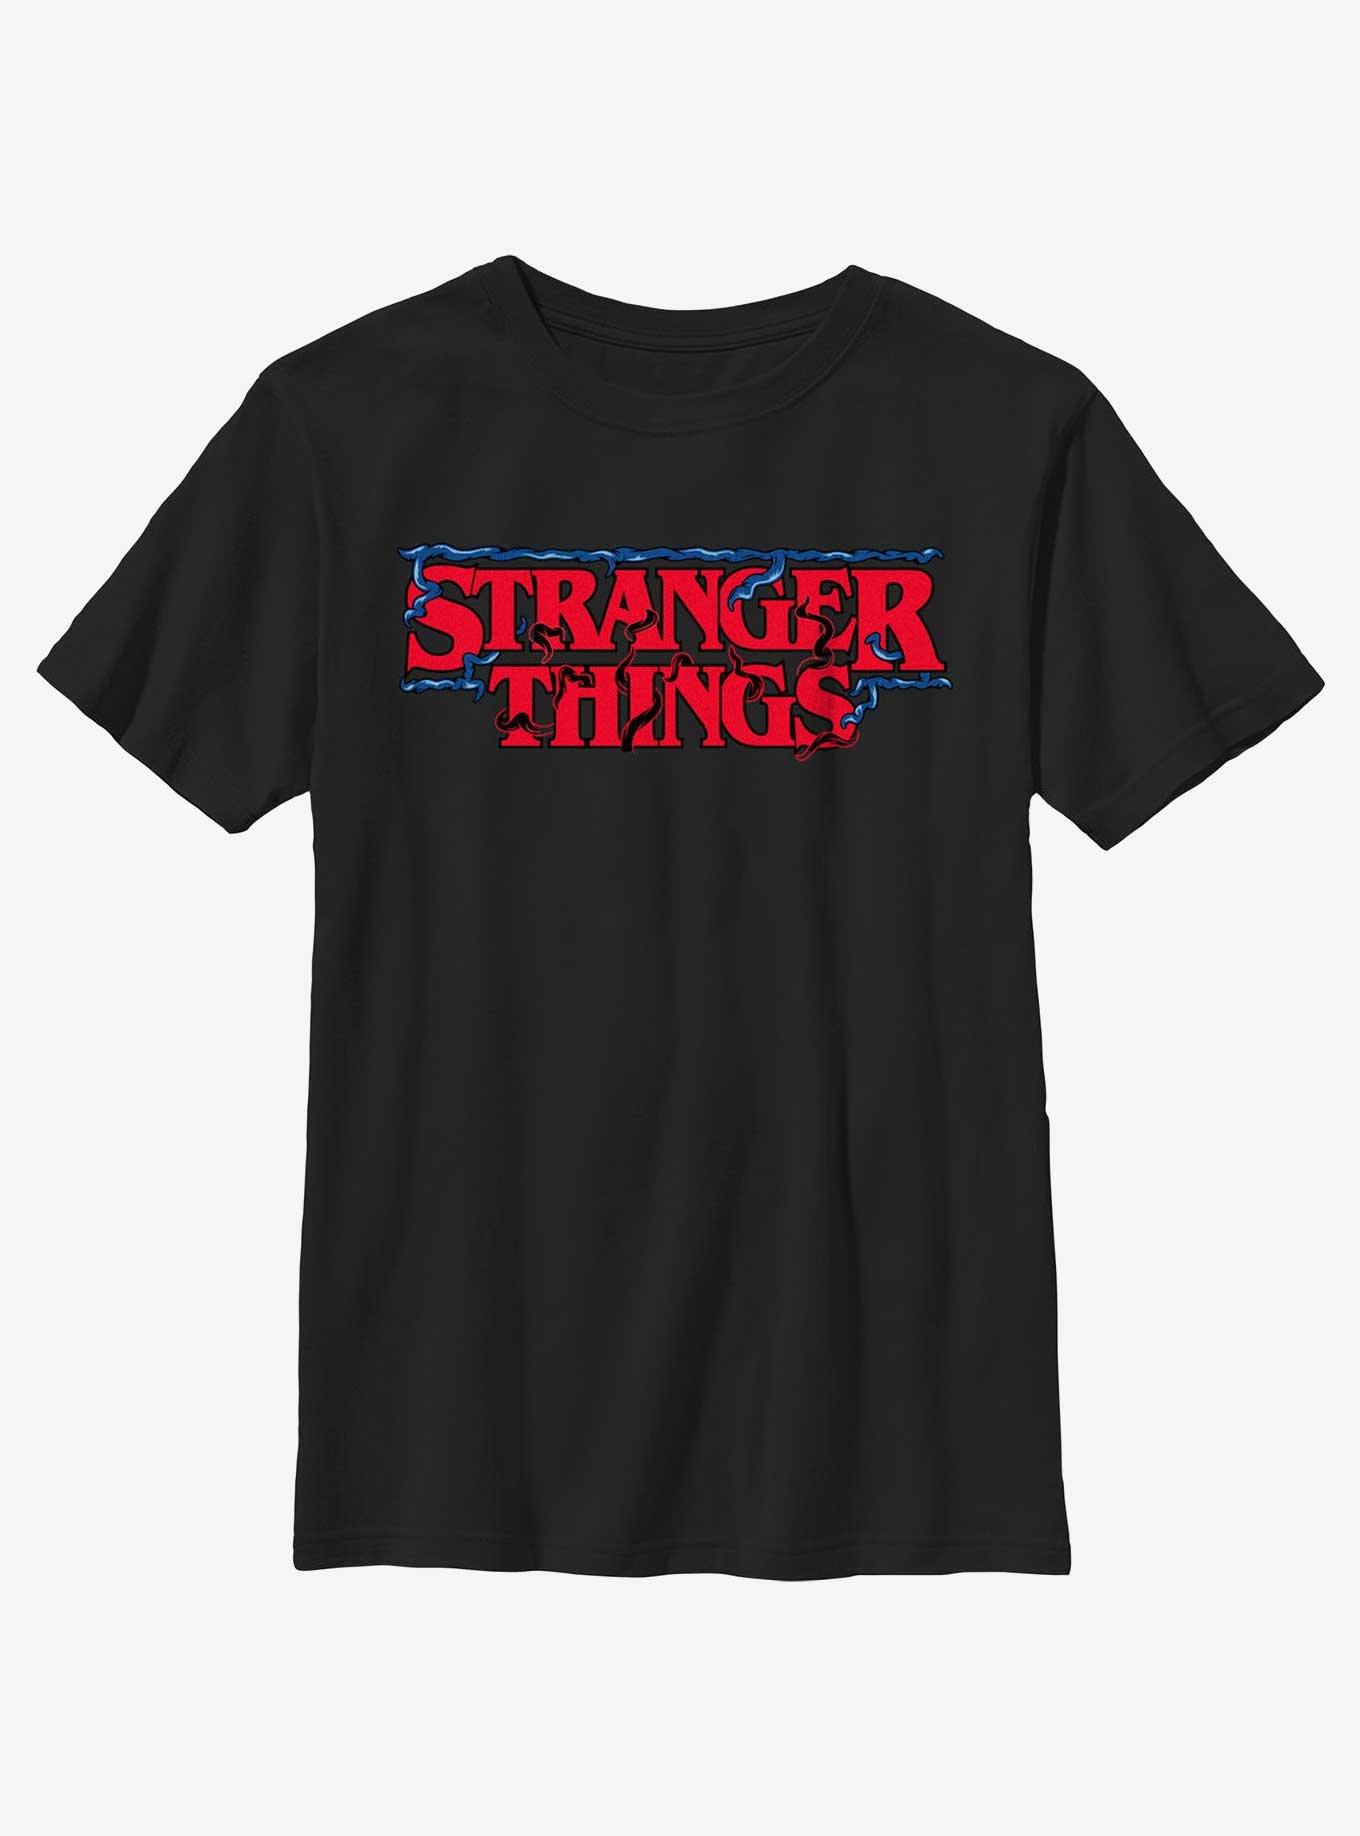 Stranger Things Intertwined Vines Logo Youth T-Shirt, BLACK, hi-res